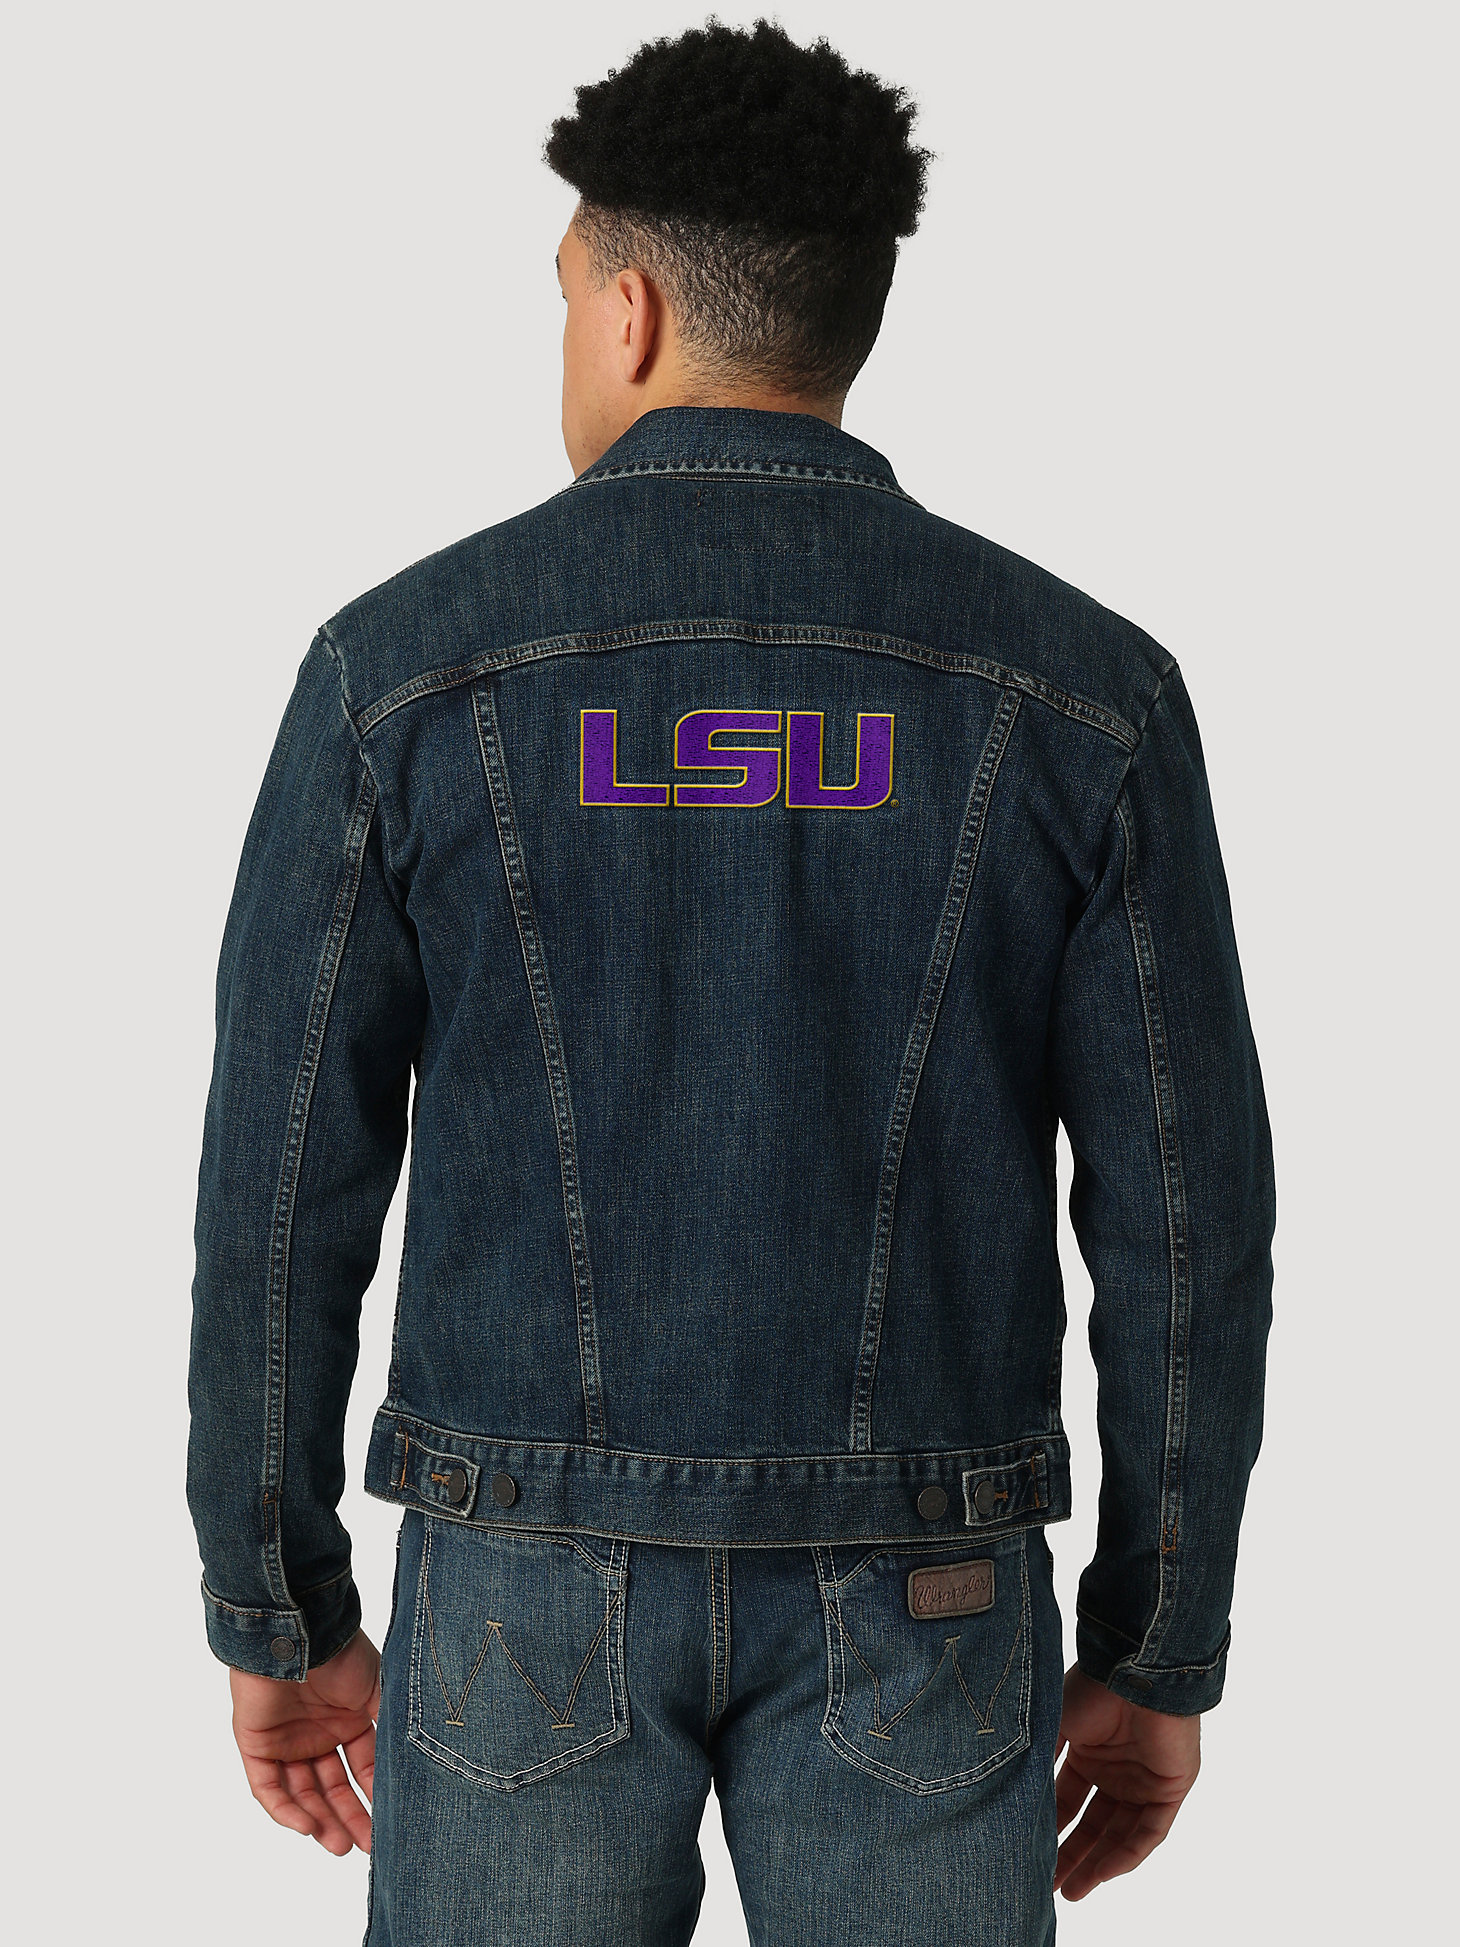 Men's Wrangler Retro Collegiate Embroidered Denim Jacket in Louisiana State University alternative view 1